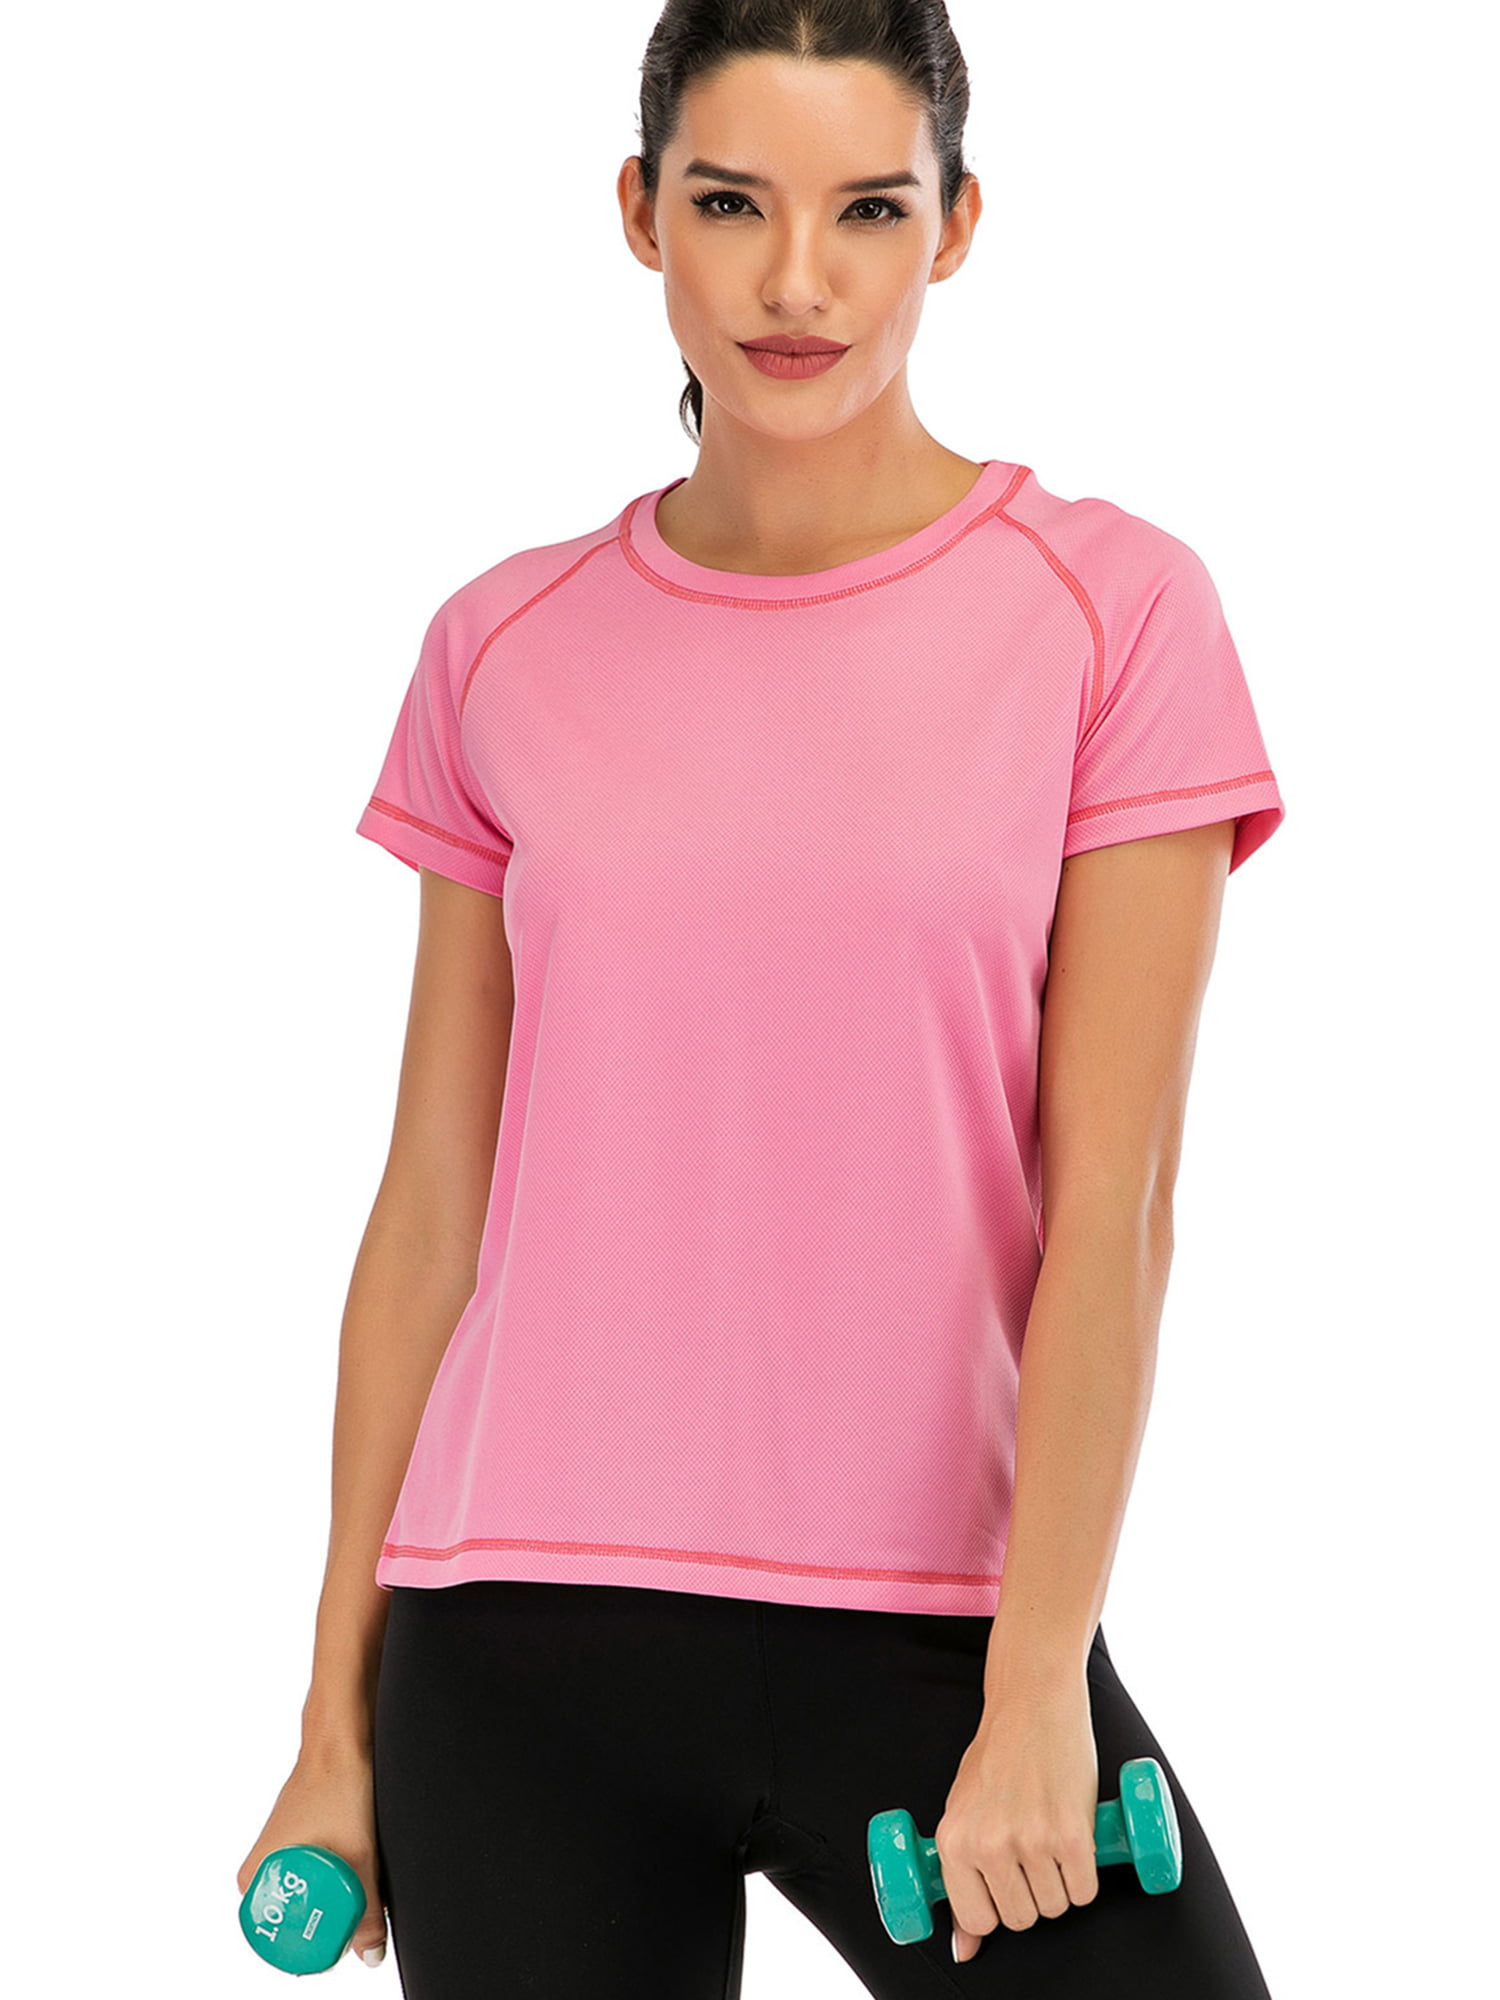 Viracy Womens Short Sleeve Workout Tops Yoga Activewear T-Shirt 